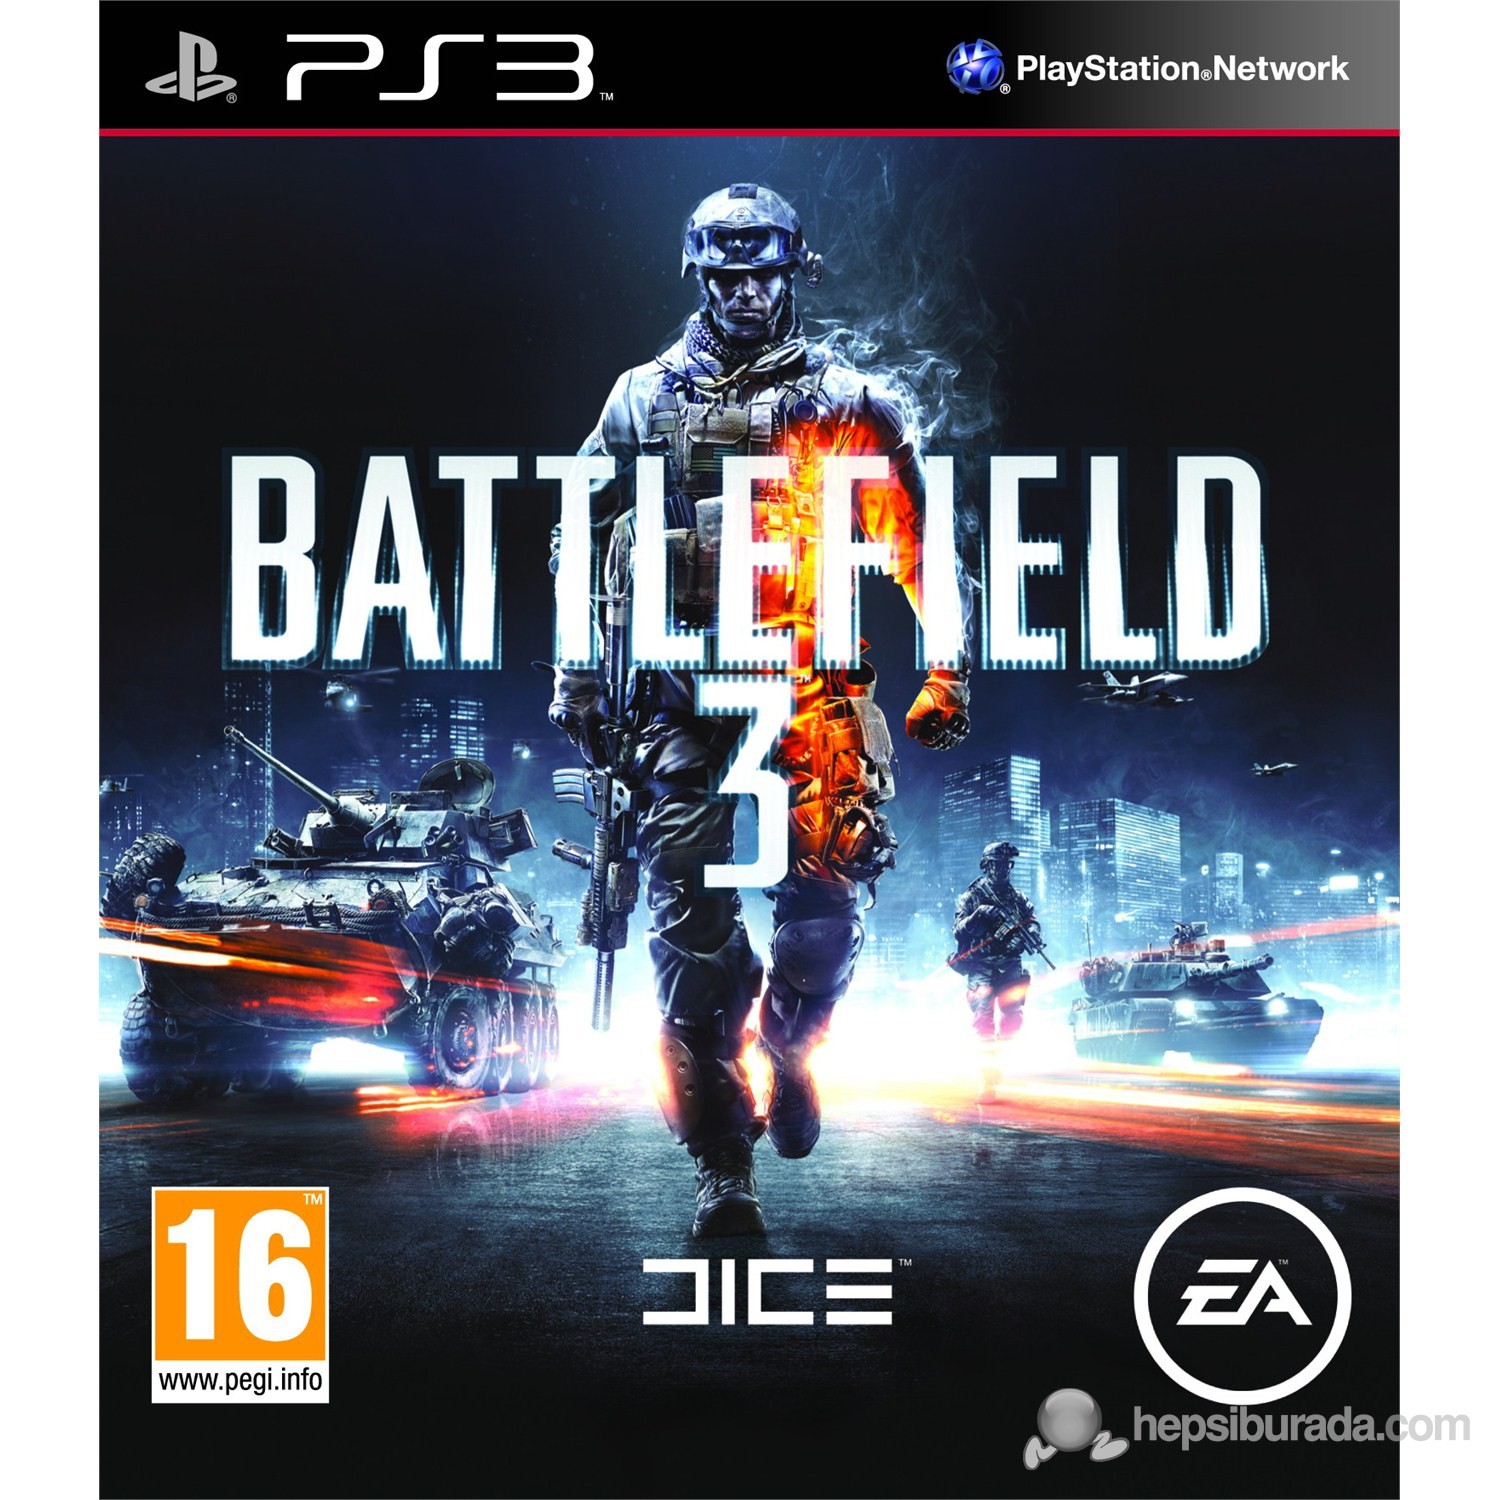 Игры на пс3 через флешку. Бателфилд 3 ps3. Бателфилд 3 на пс3. Диски ПС 3 бателфилд 3. Battlefield 3 - Premium Edition [ps3, русская версия].